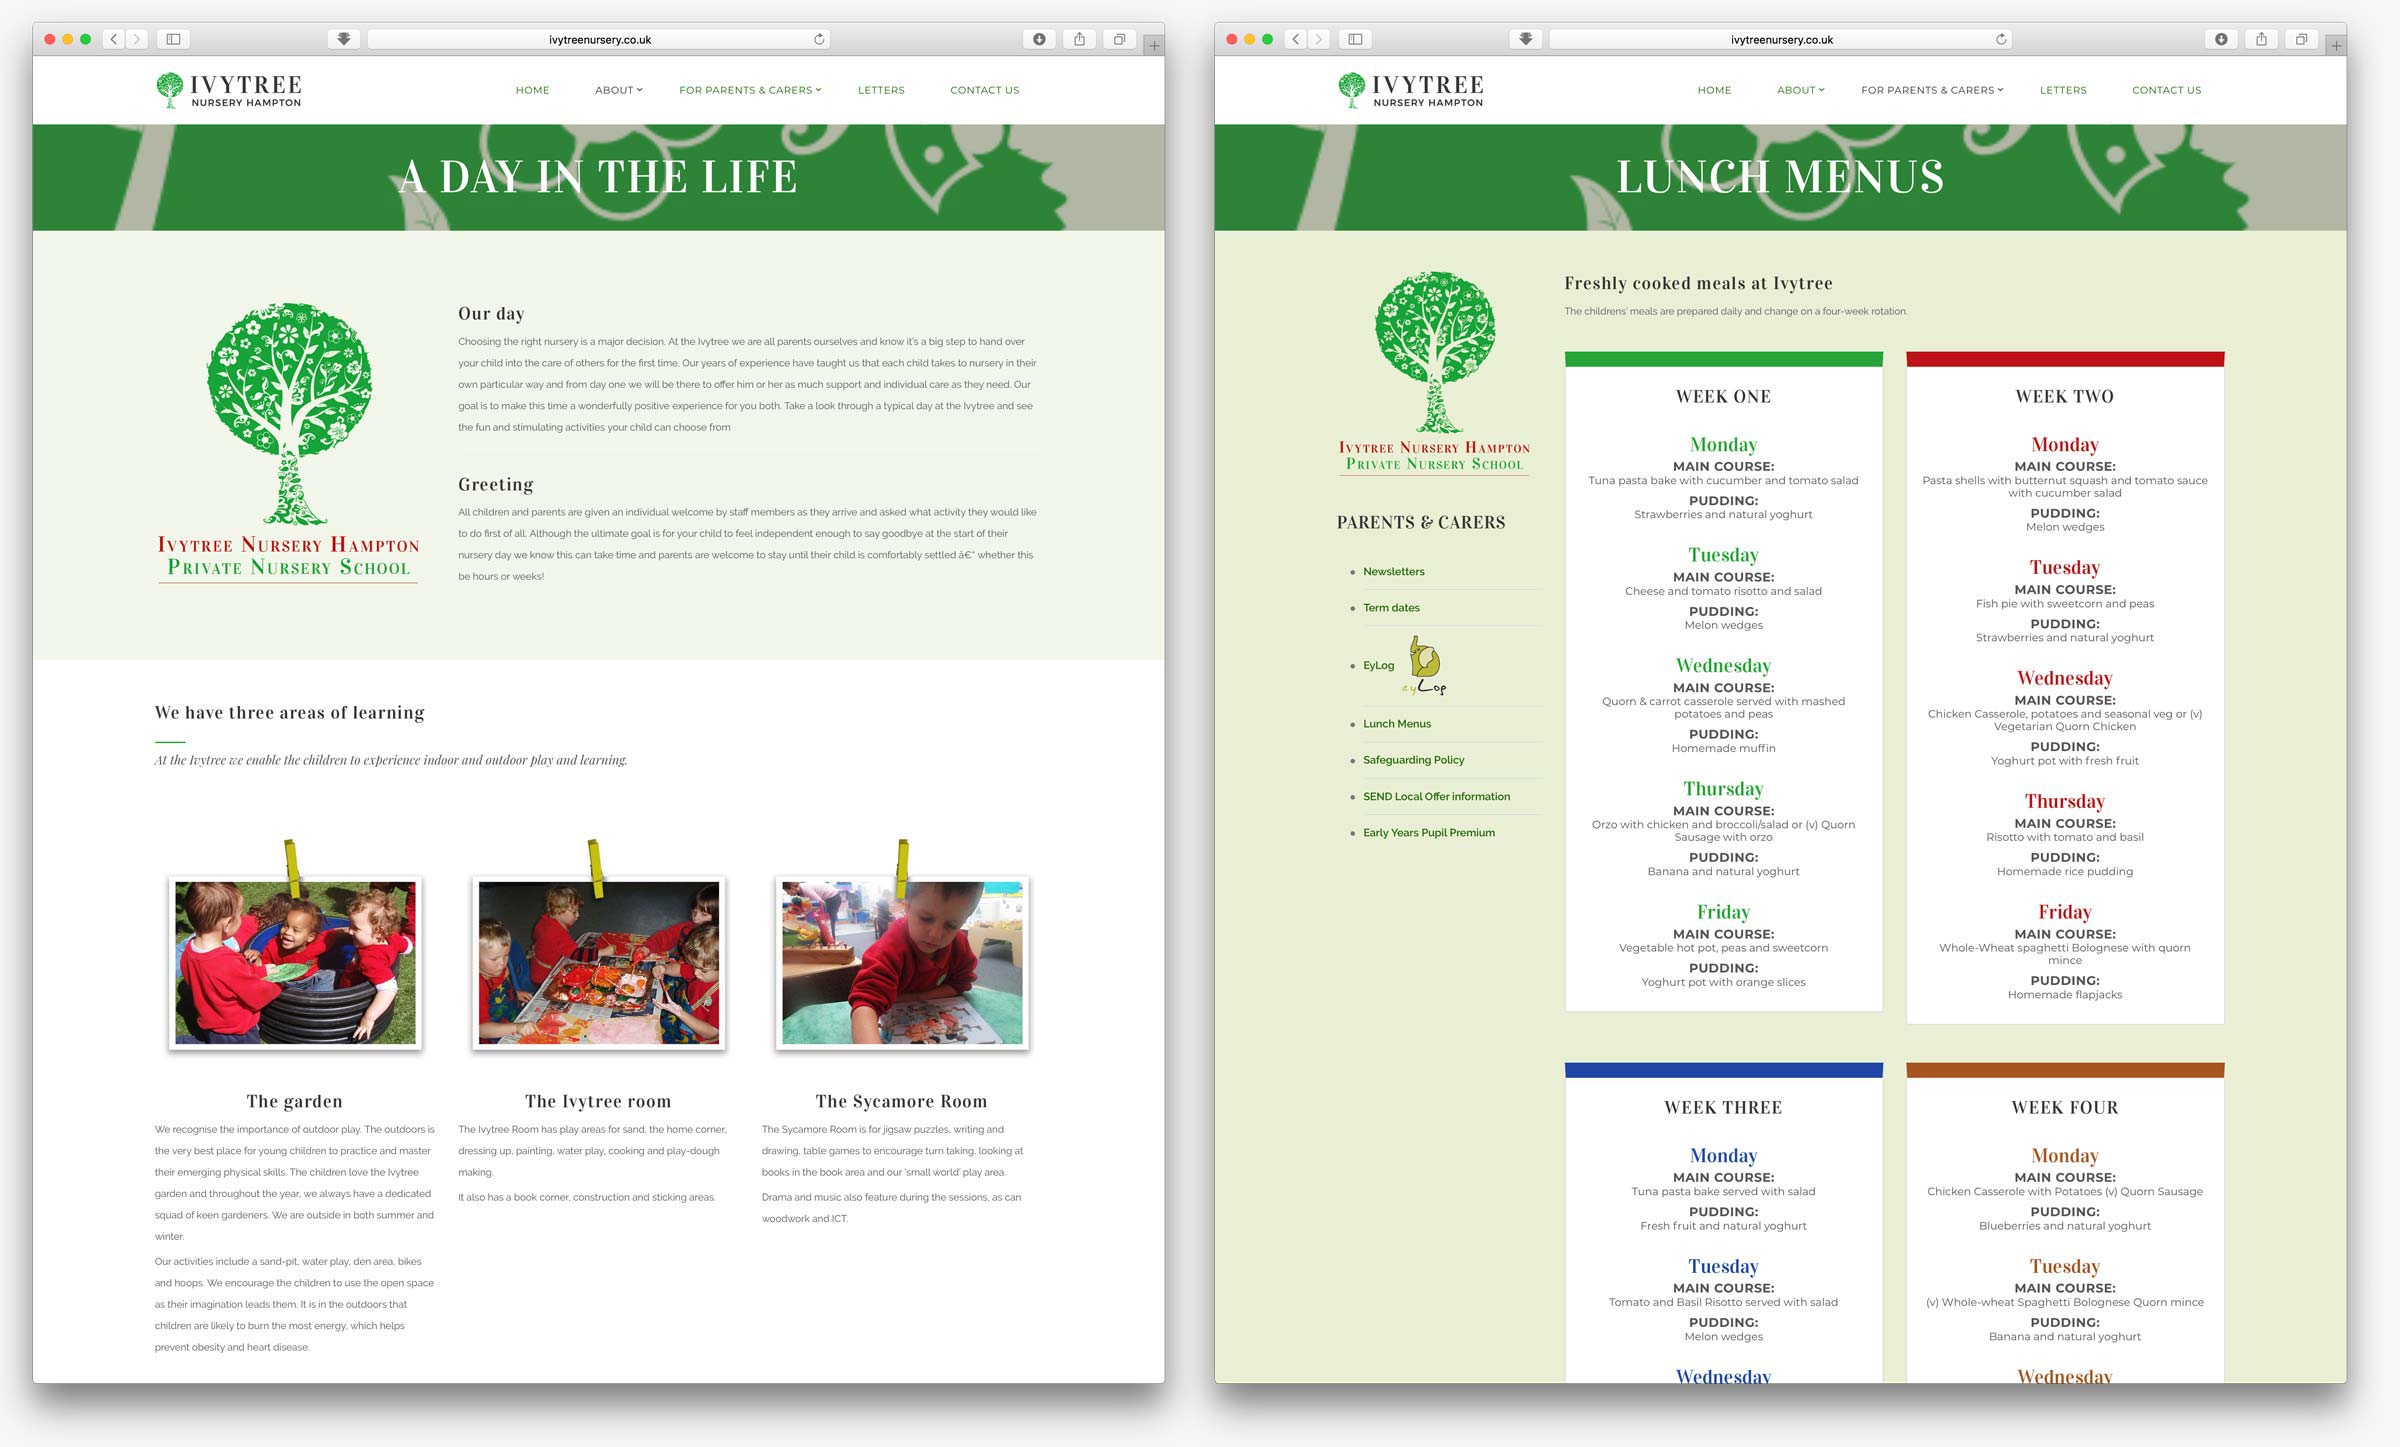 Ivytree Nursery website